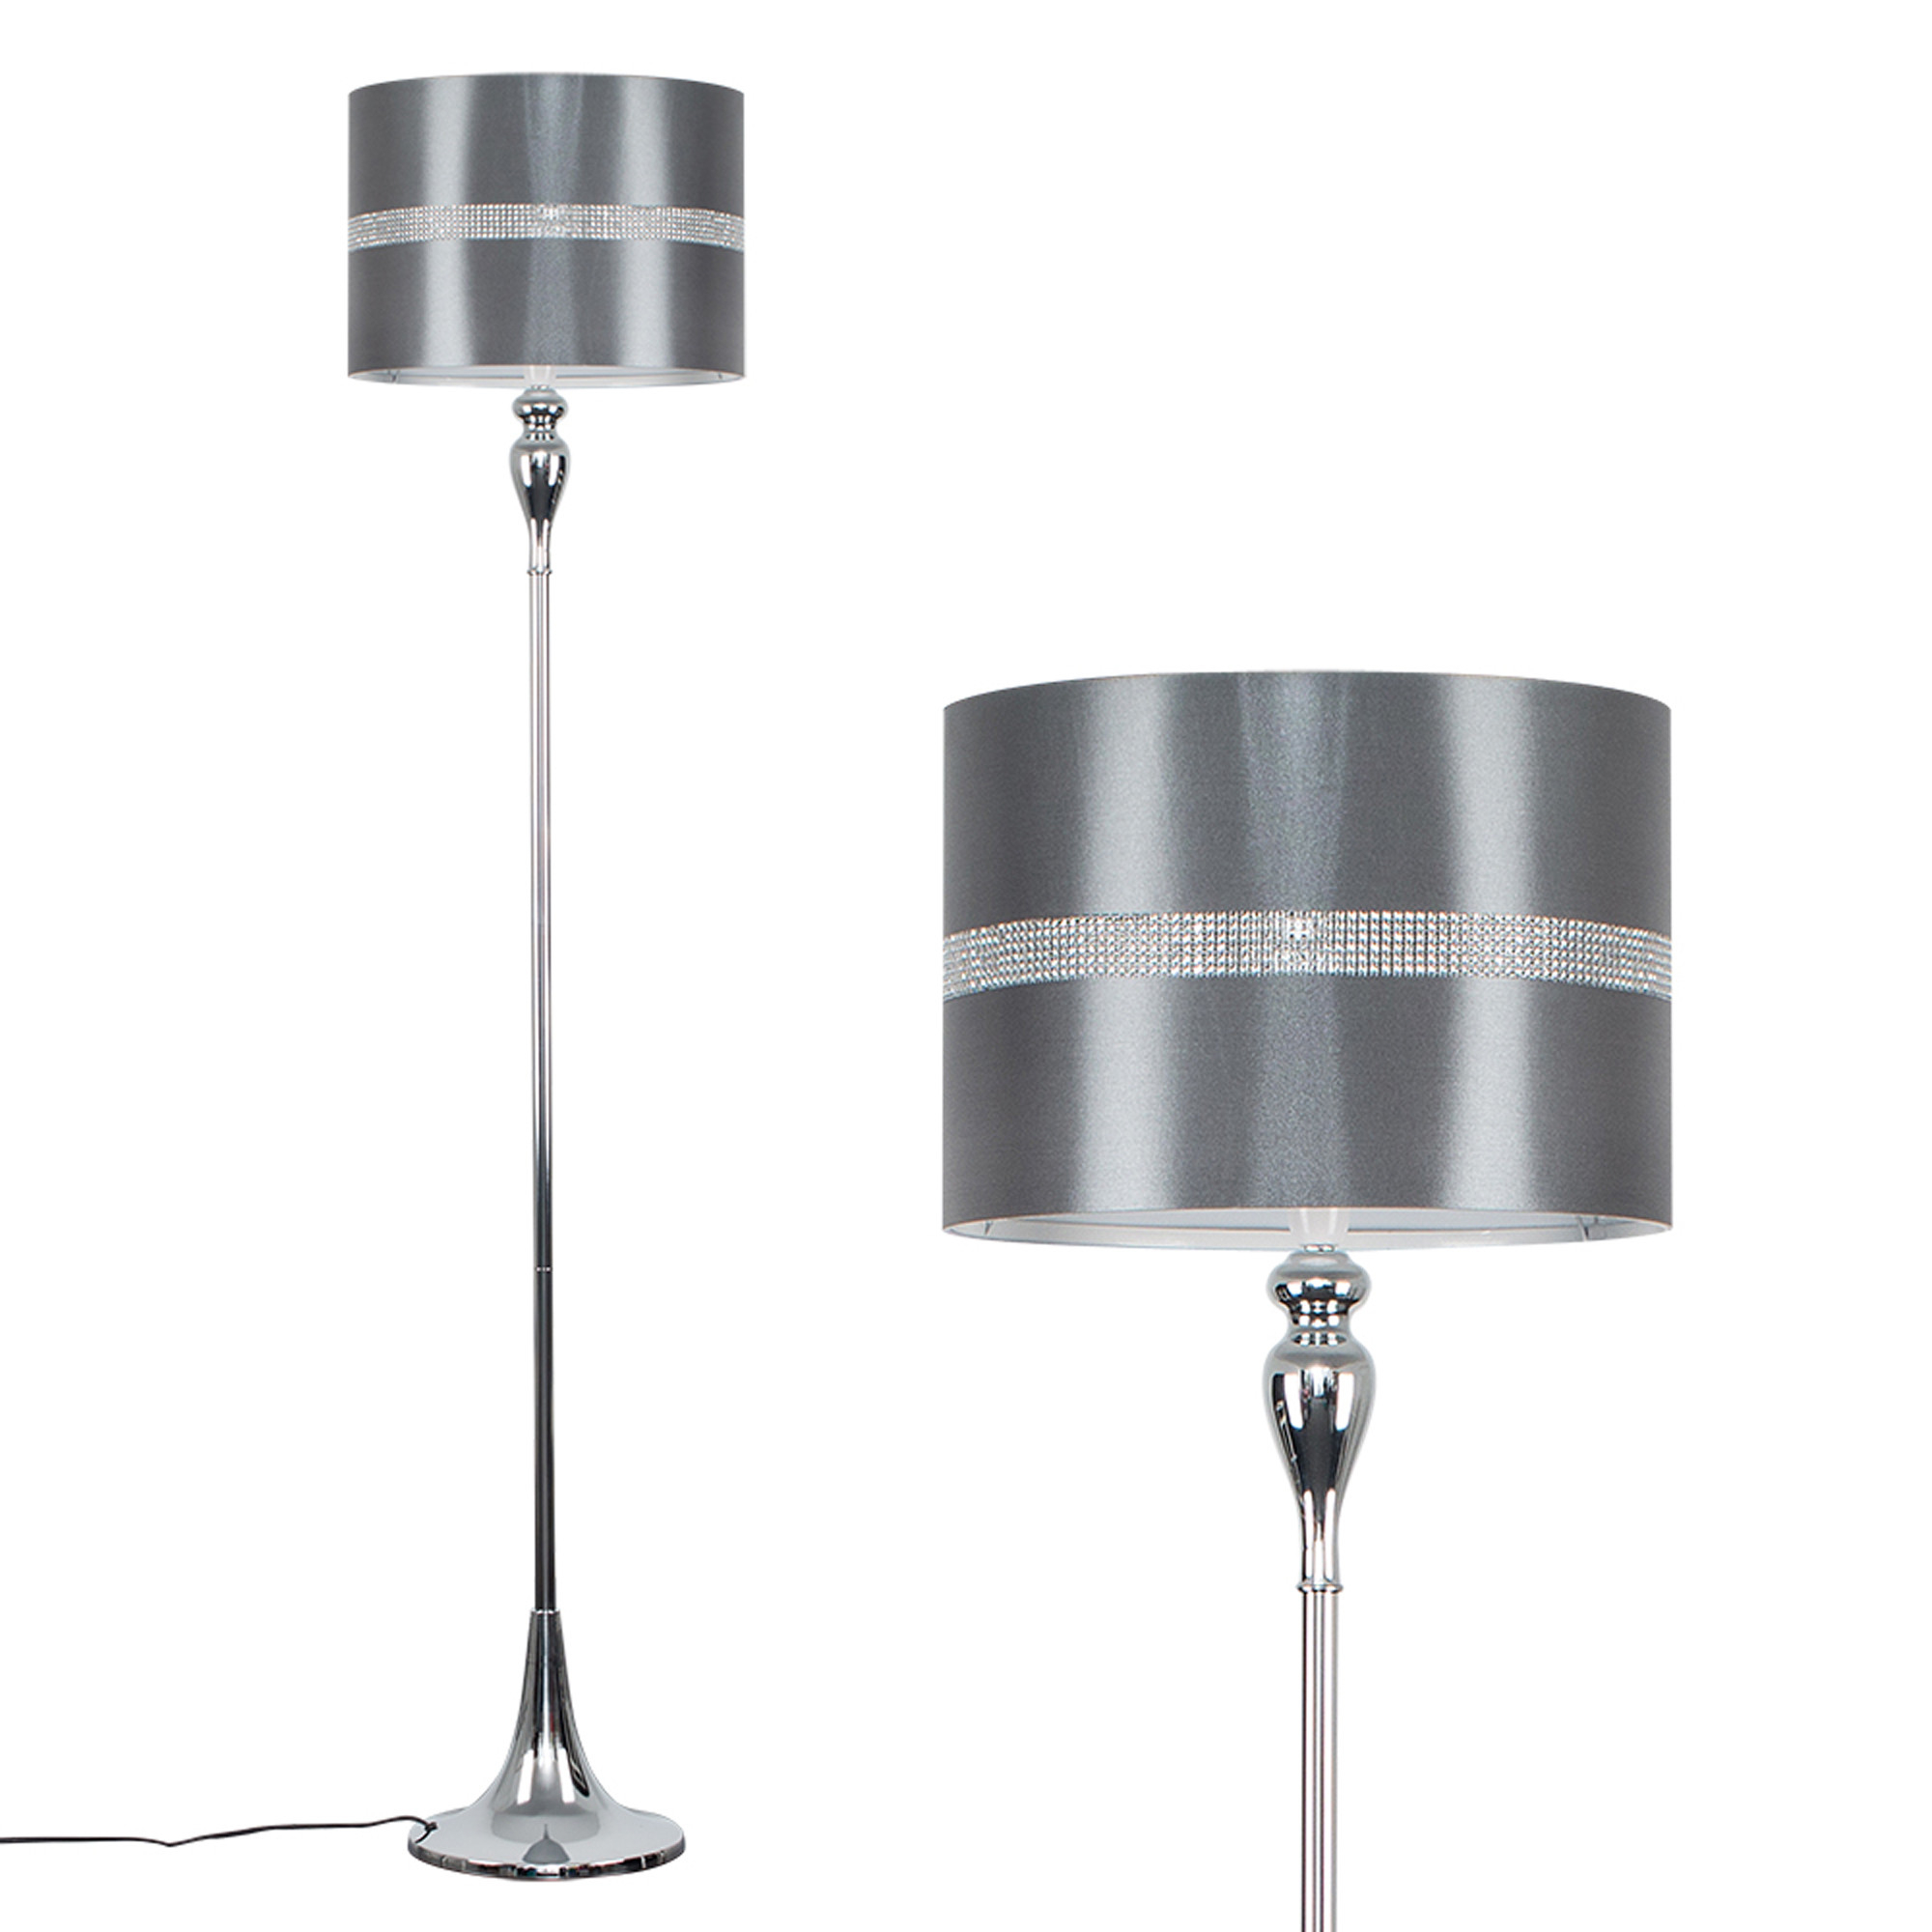 Lamps Floor Lamp Arm Chrome Floor Lamp Asda Chrome Floor pertaining to dimensions 2000 X 2000